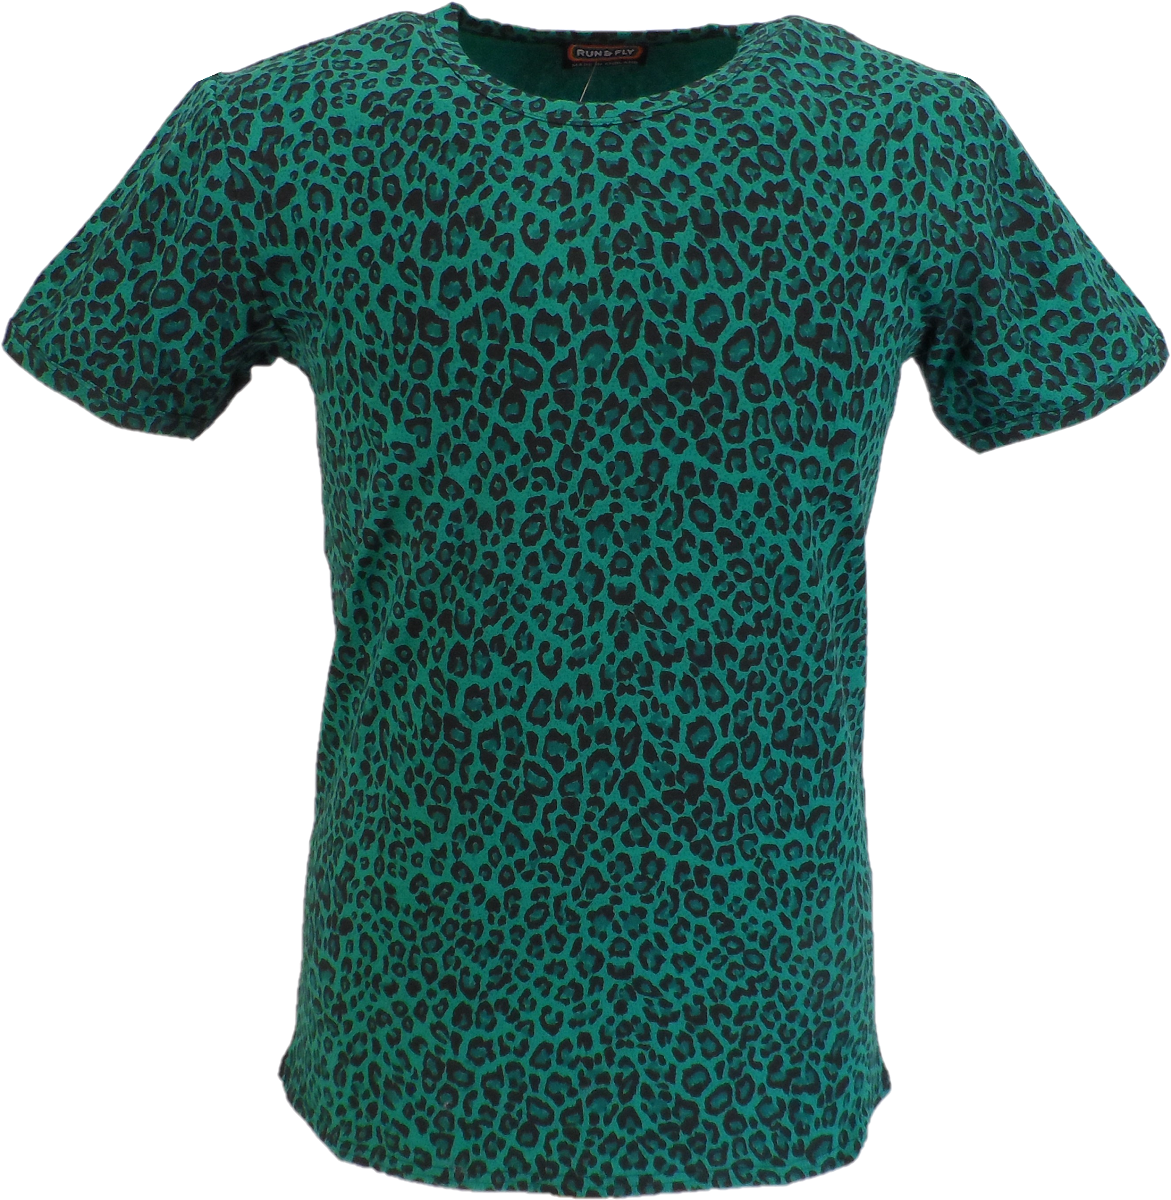 Mens Retro 70s Teal Leopard Print T Shirt|Free UK Shipping – Mazeys UK